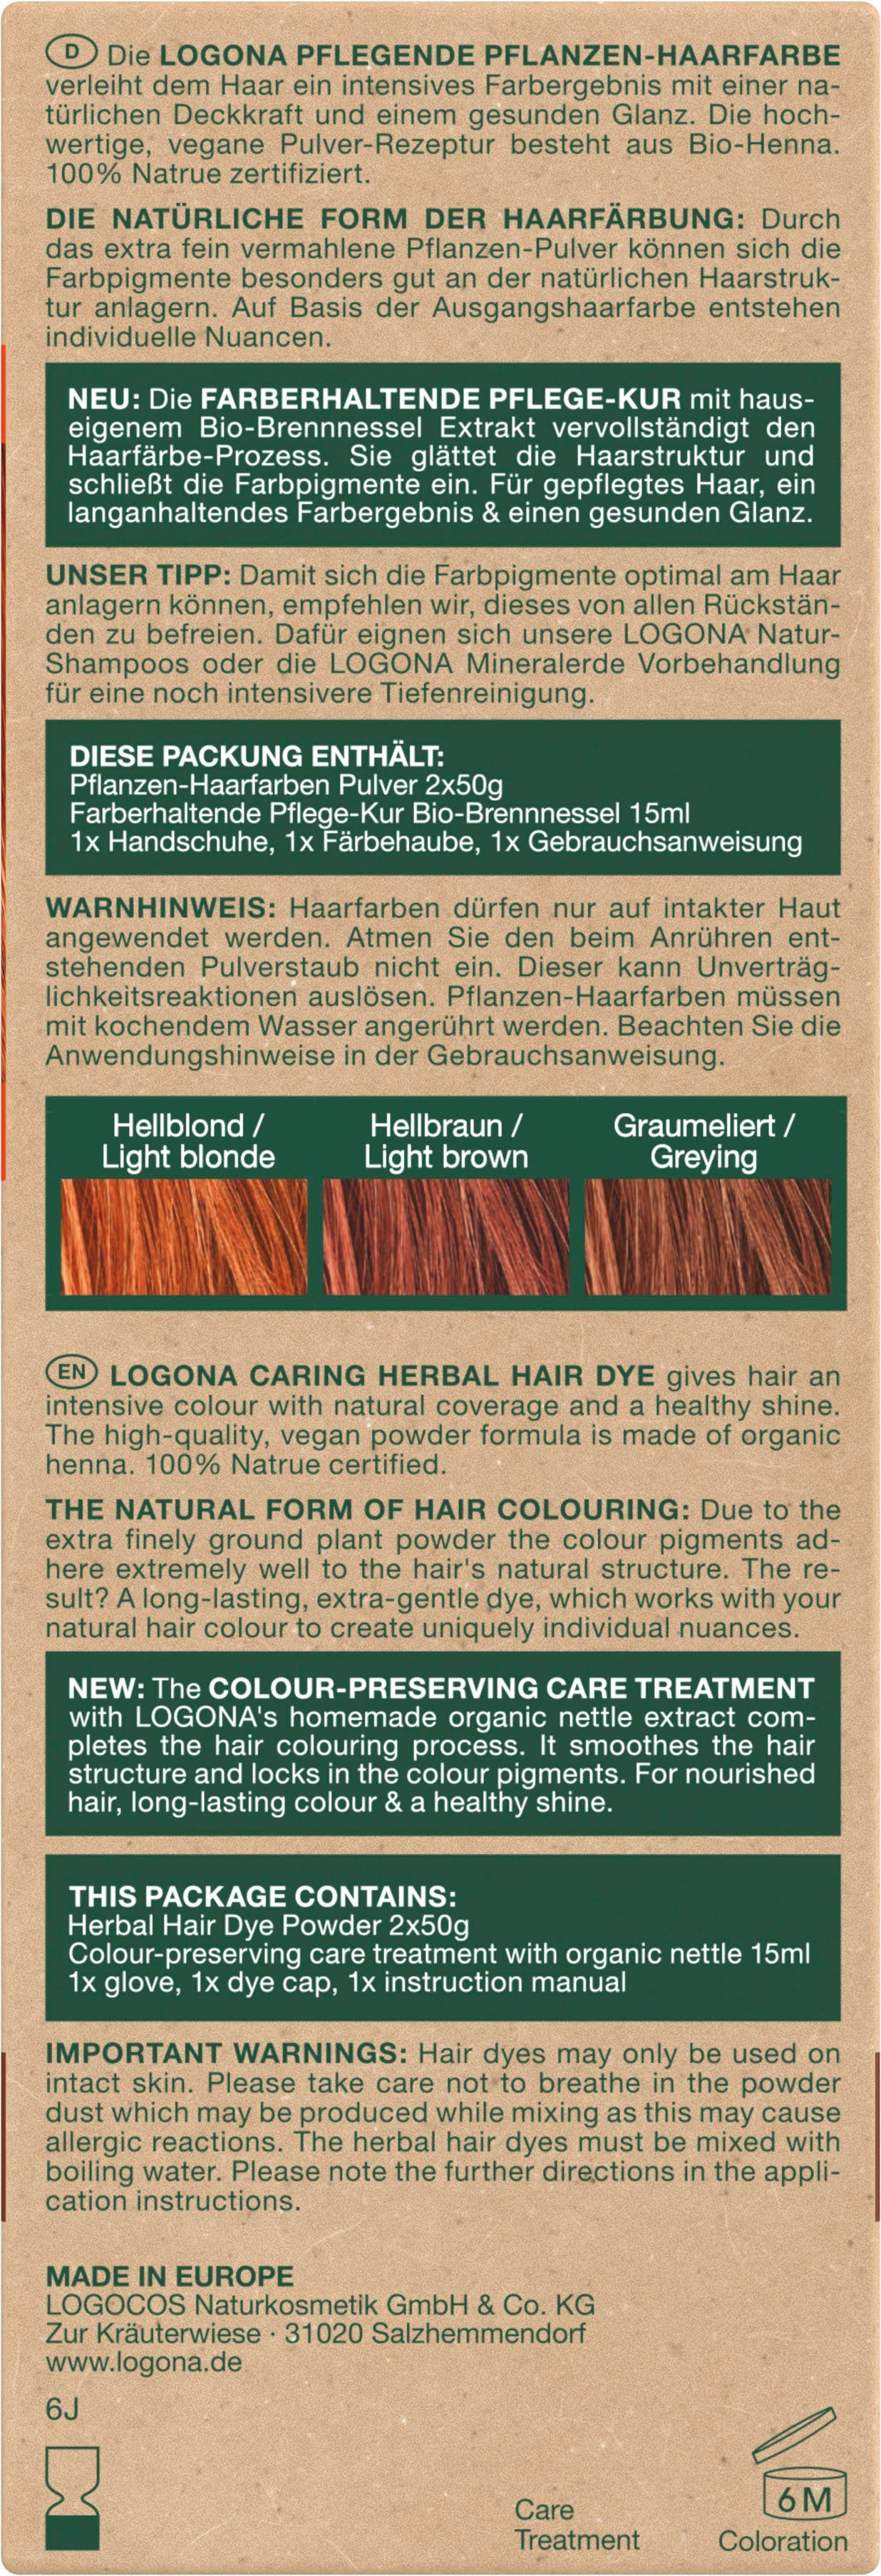 Hennarot LOGONA Haarfarbe 04 Pflanzen-Haarfarbe Pulver